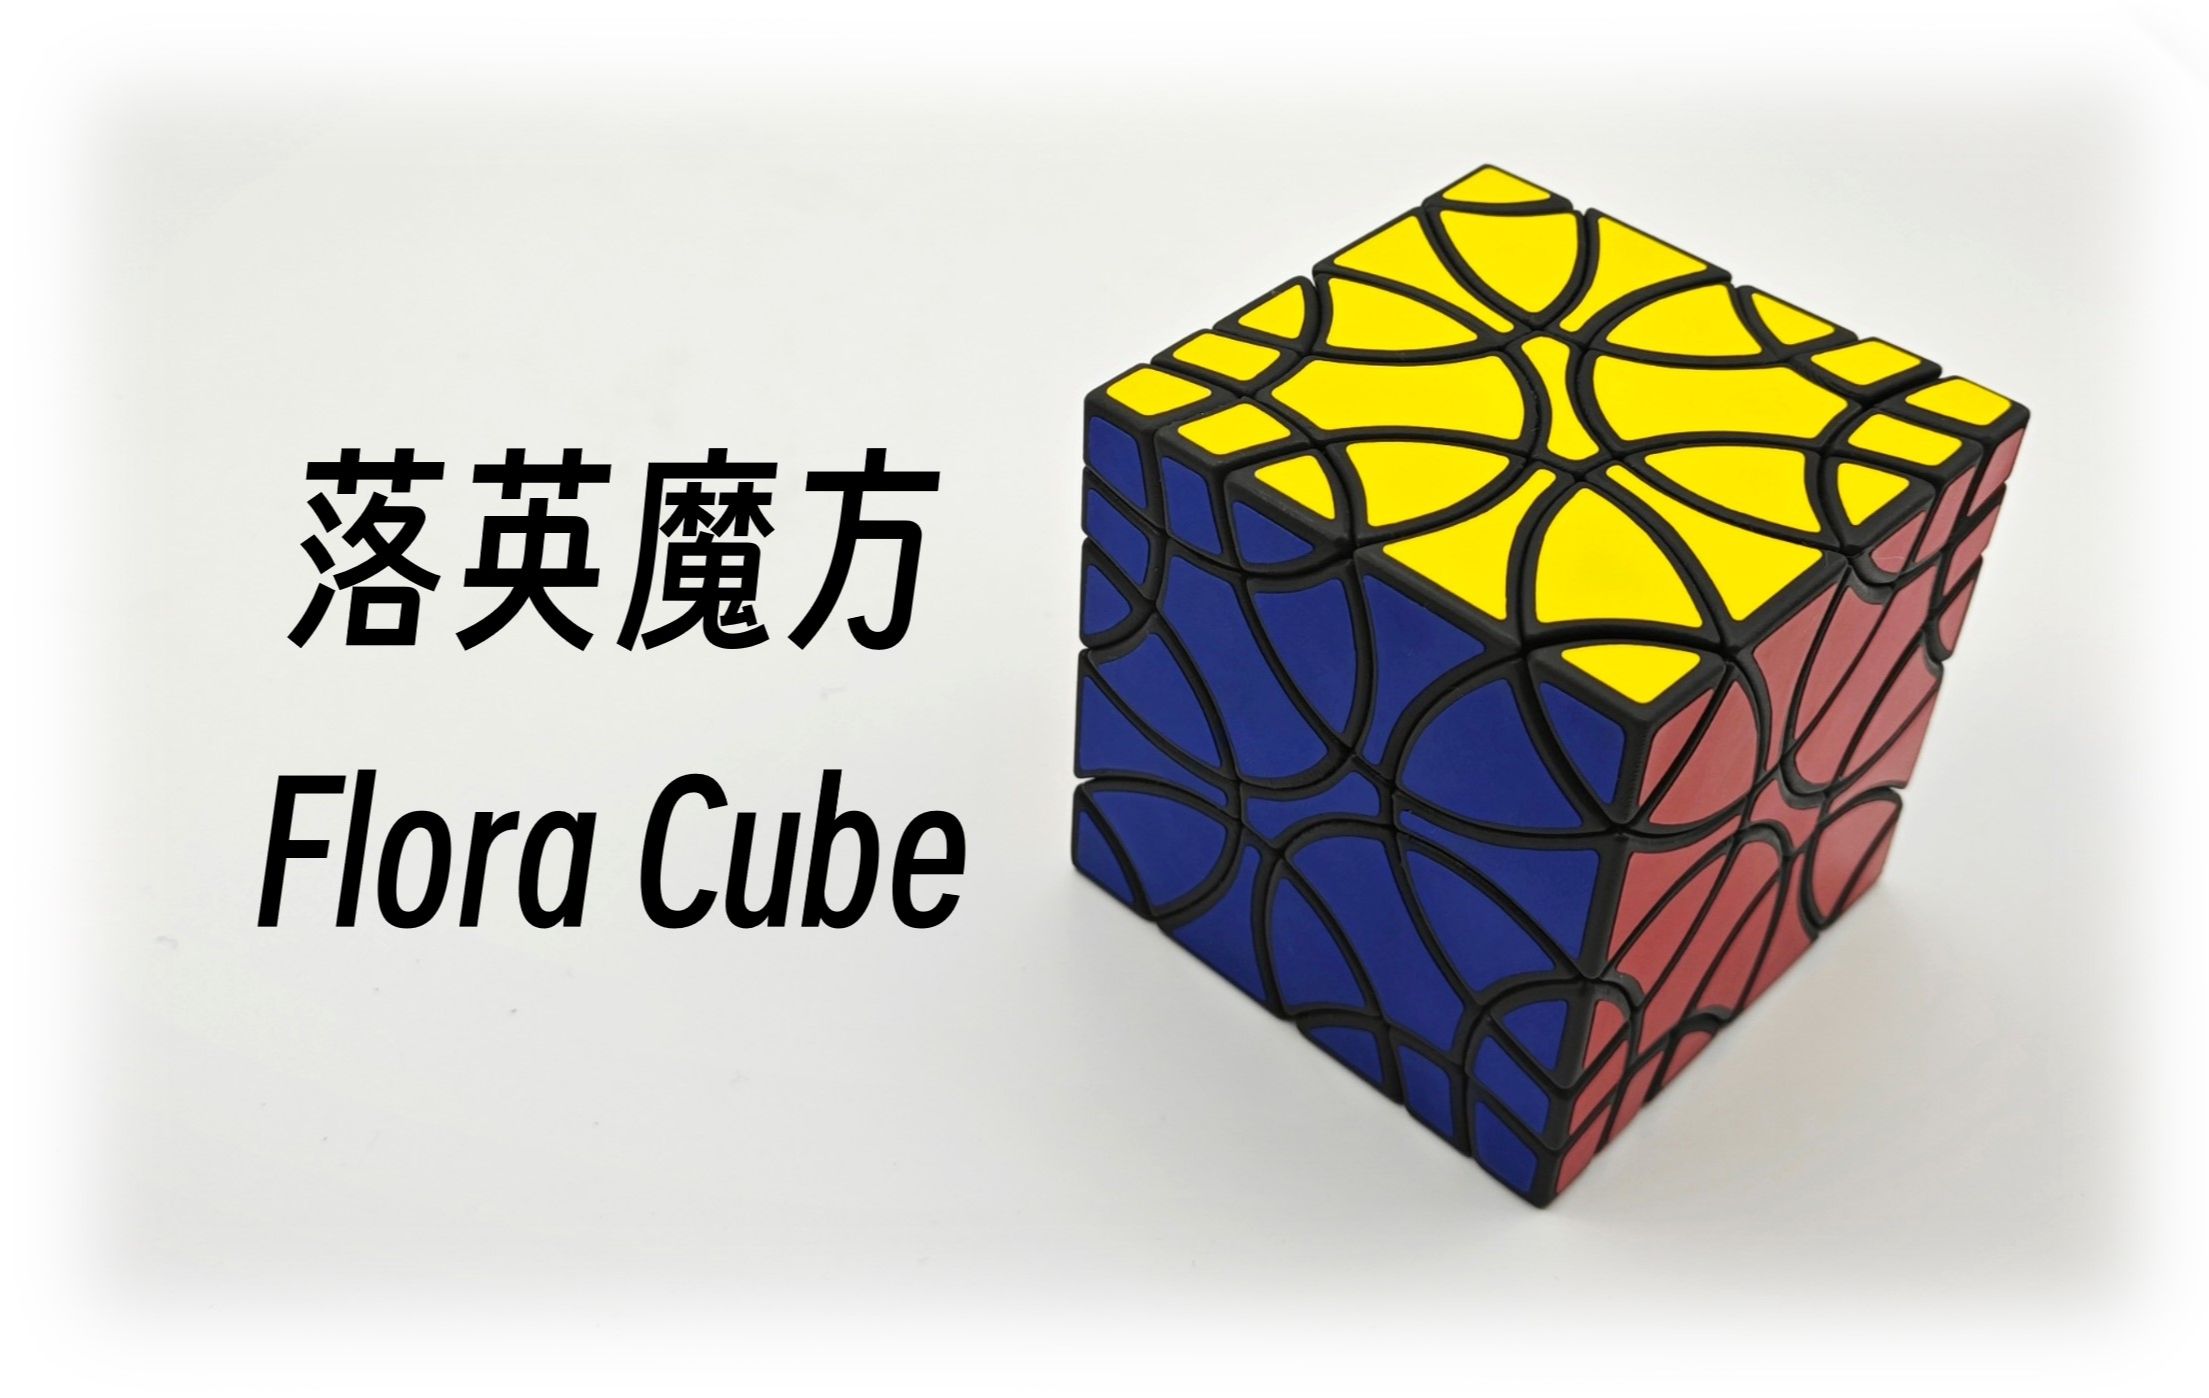 【3D打印魔方】落英魔方 Flora Cube ——“类转棱”+“类转面”